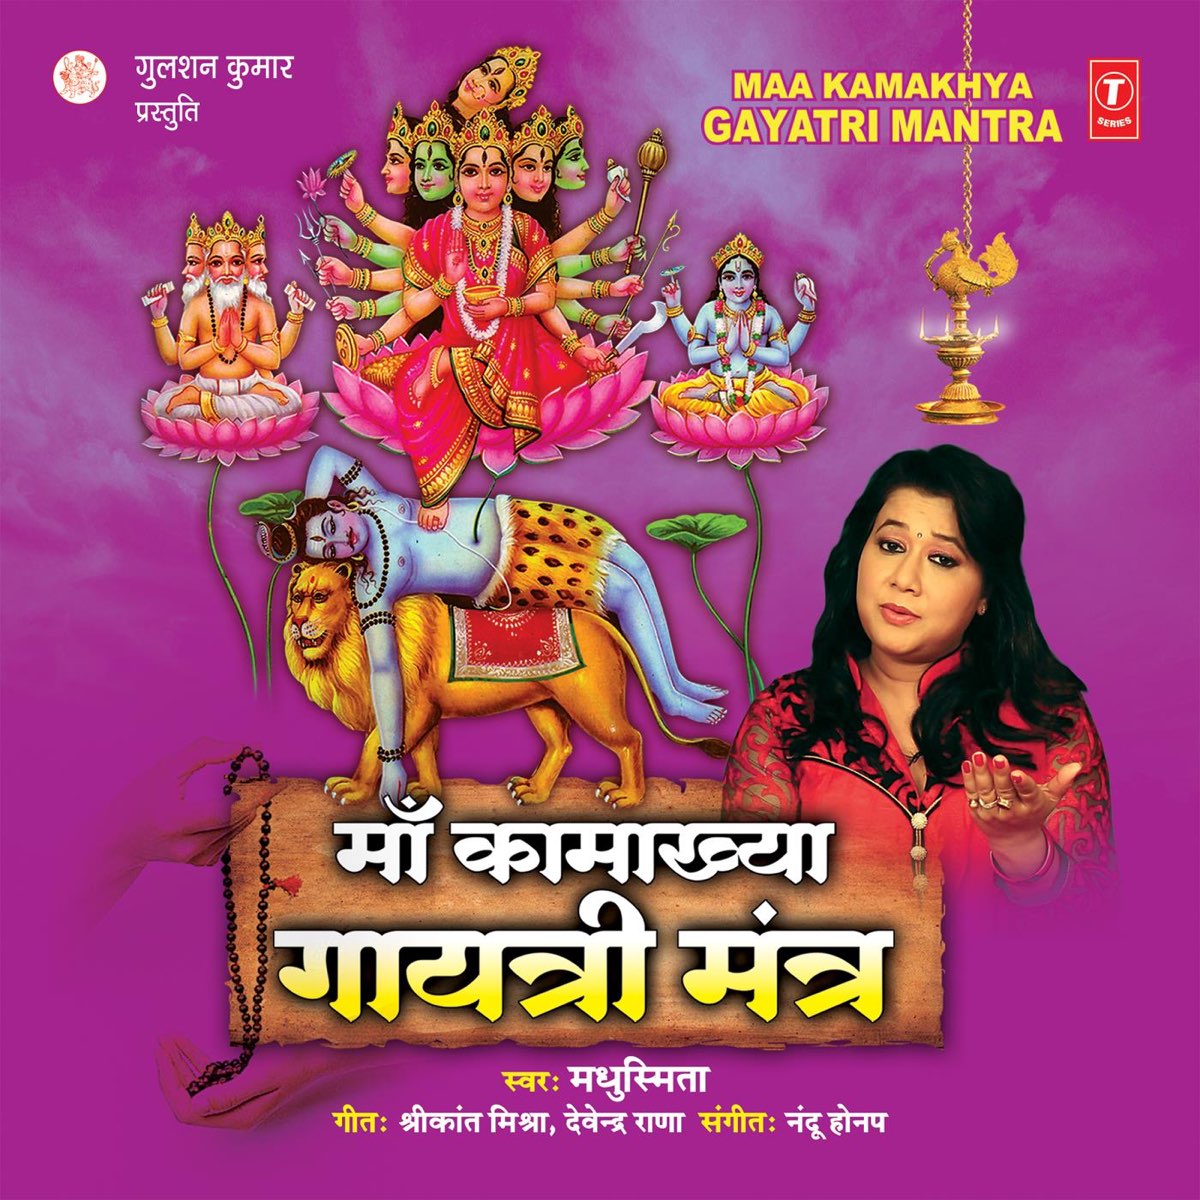 Maa Kamakhya Gayatri Mantra by Madhusmita on Apple Music